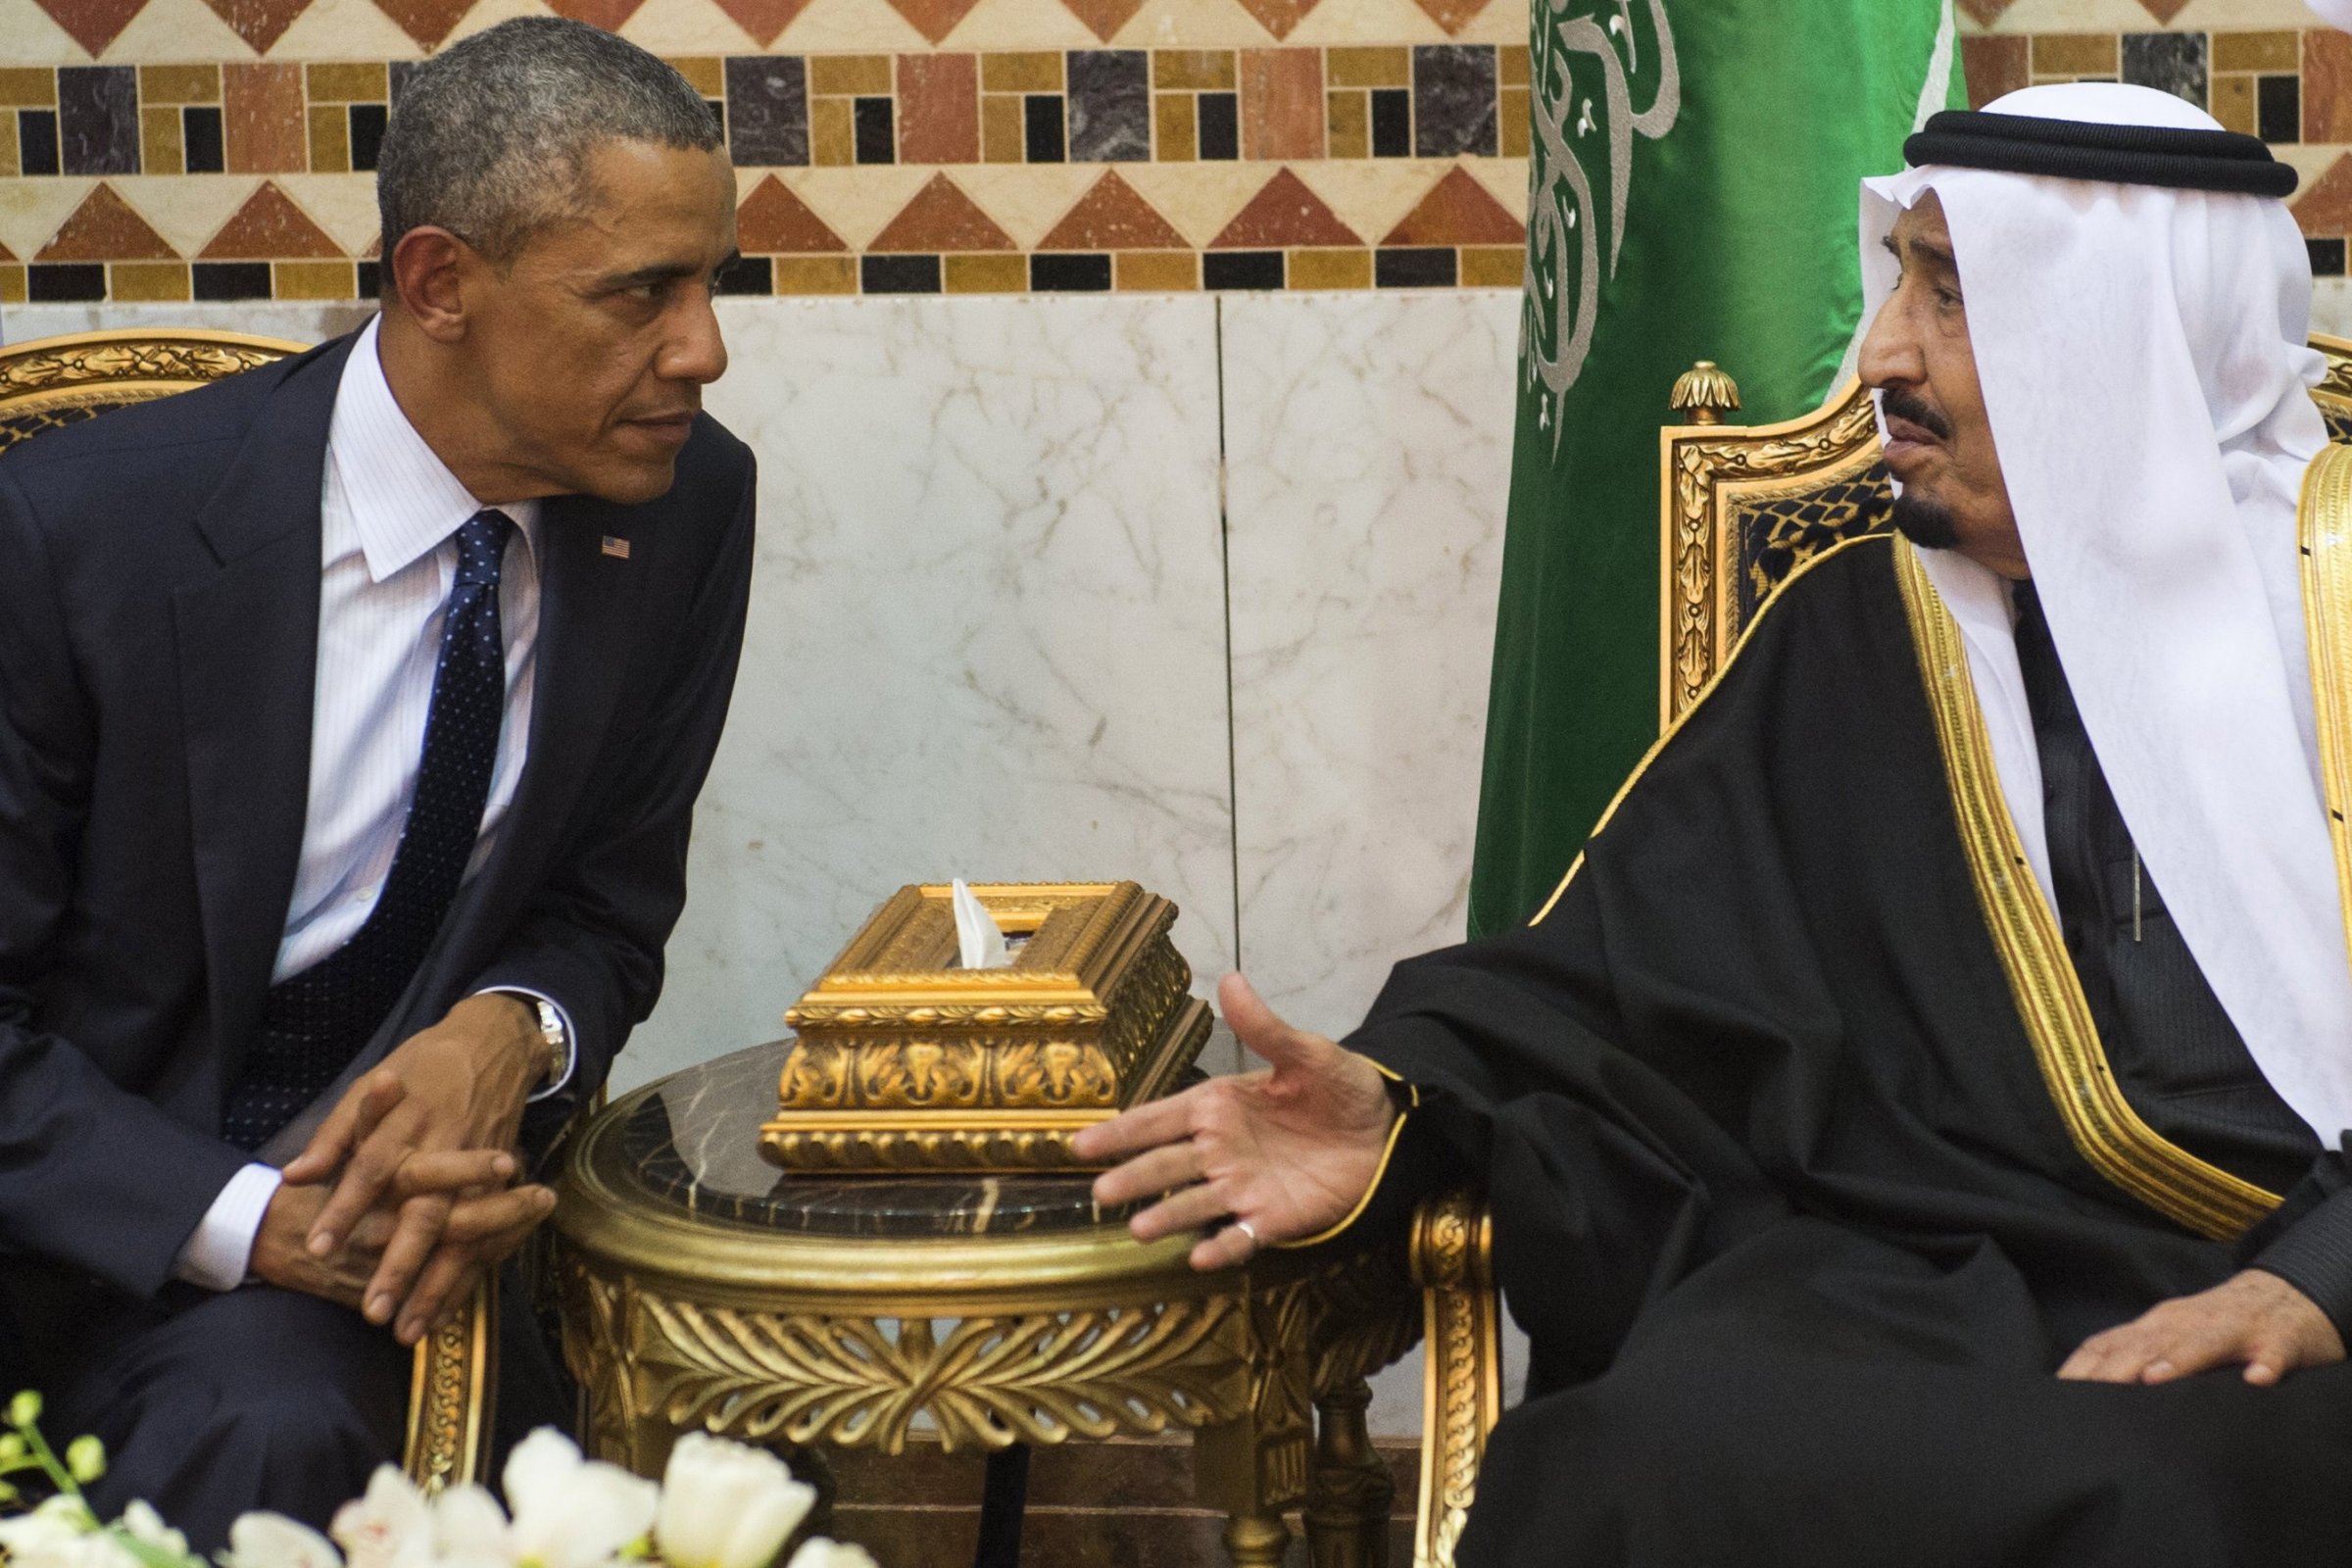 Saudi King Salman meets with President Barack Obama at the Erga Palace in the capital Riyadh on January 27, 2015.